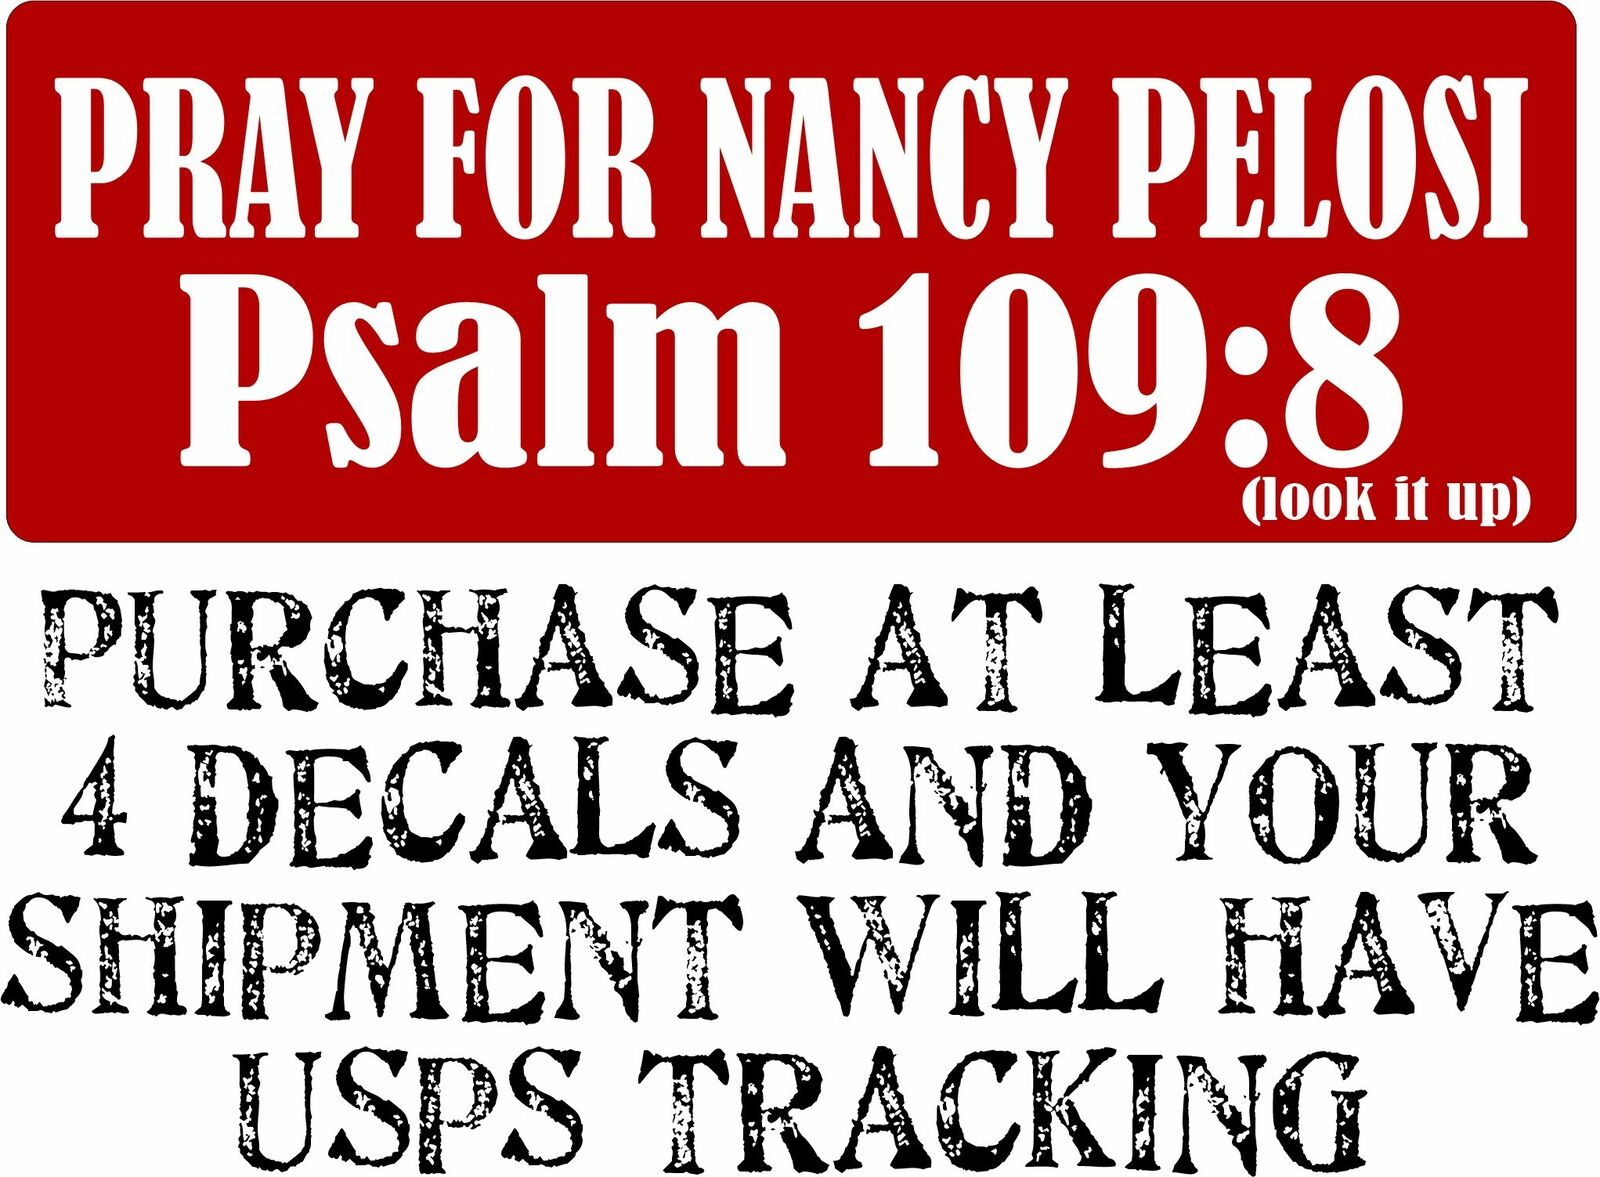 Nancy Pelosi Pray for Nancy Psalm 109:8 Bumper Sticker 8.7" x 3" (LOOK IT UP!) - Powercall Sirens LLC